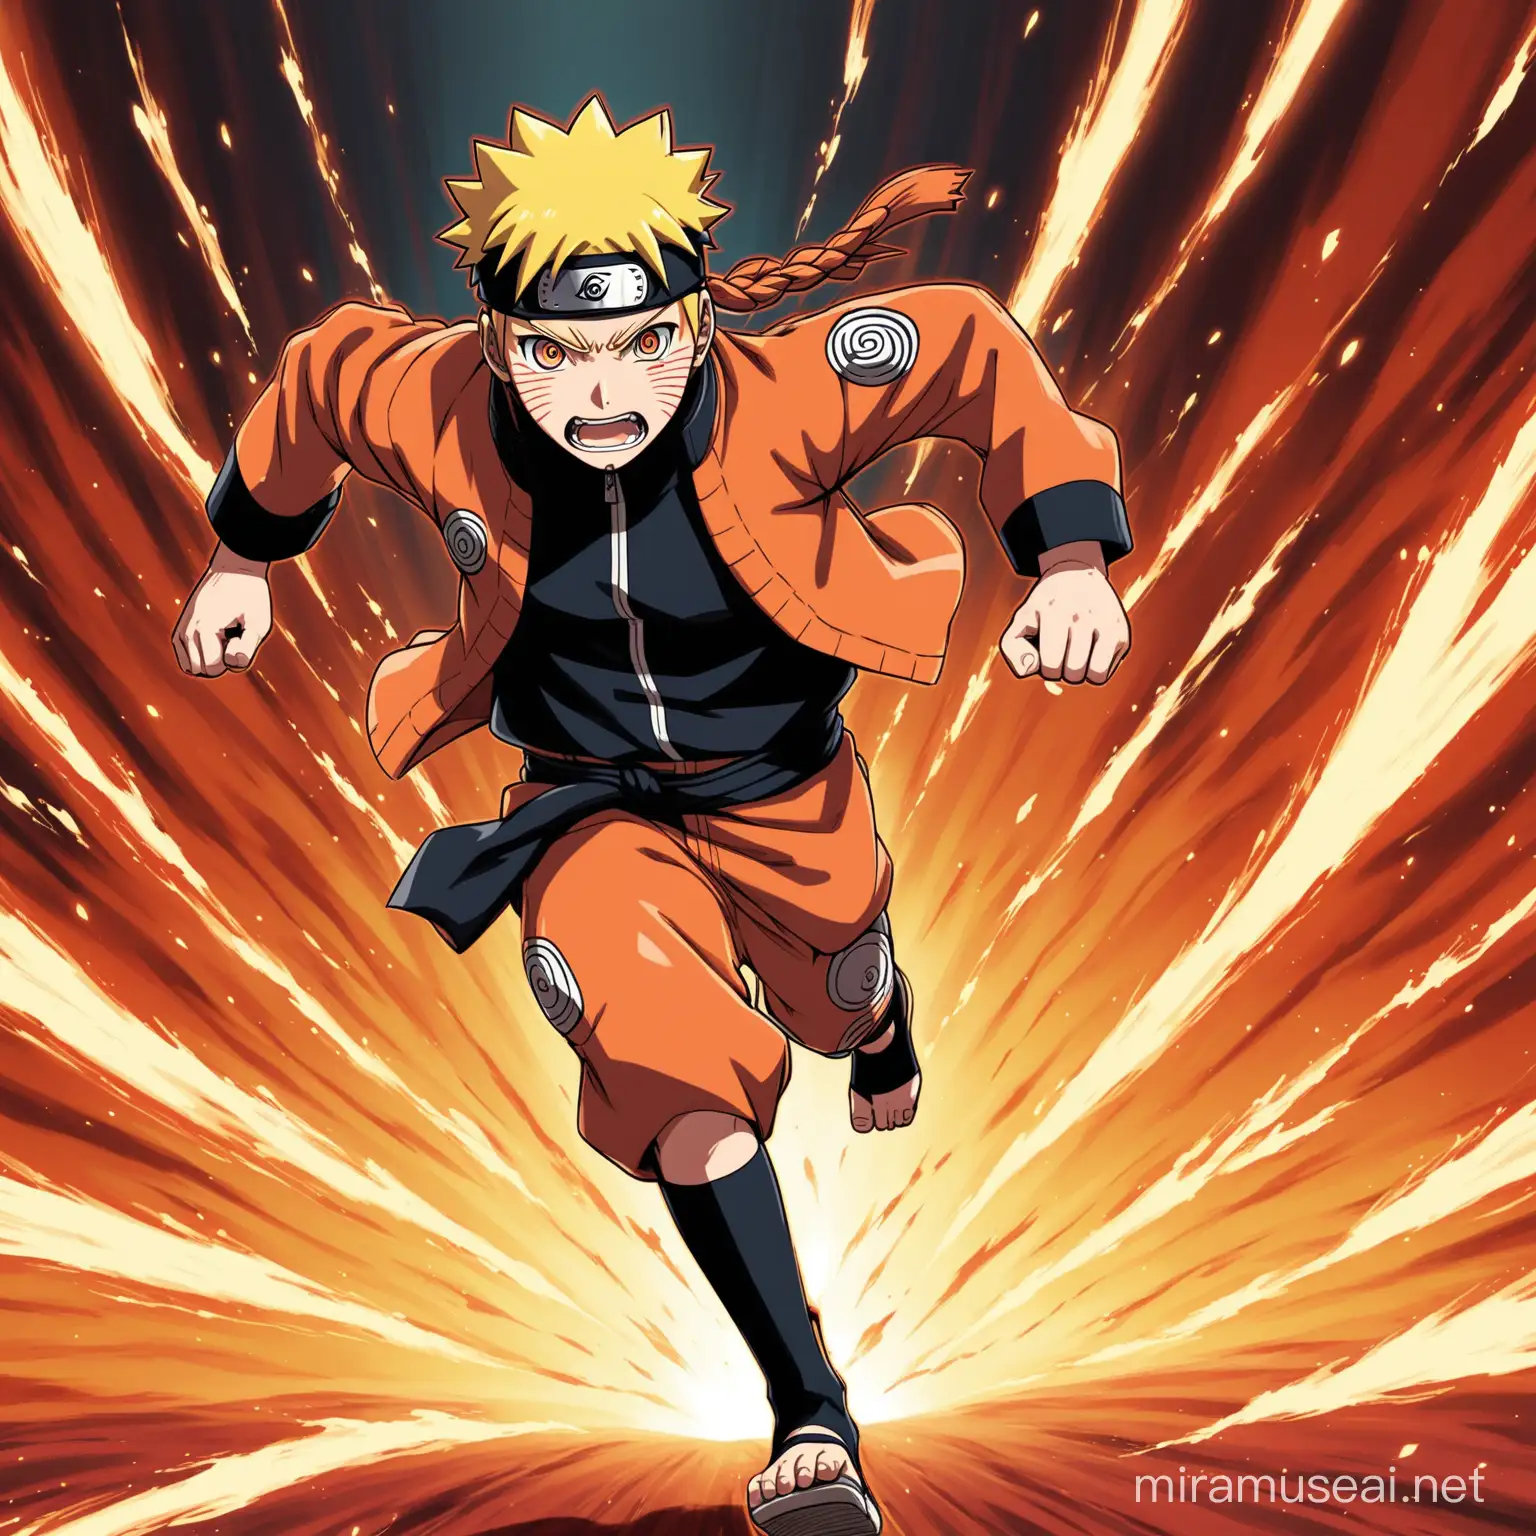 Fierce Naruto Running Towards Viewer